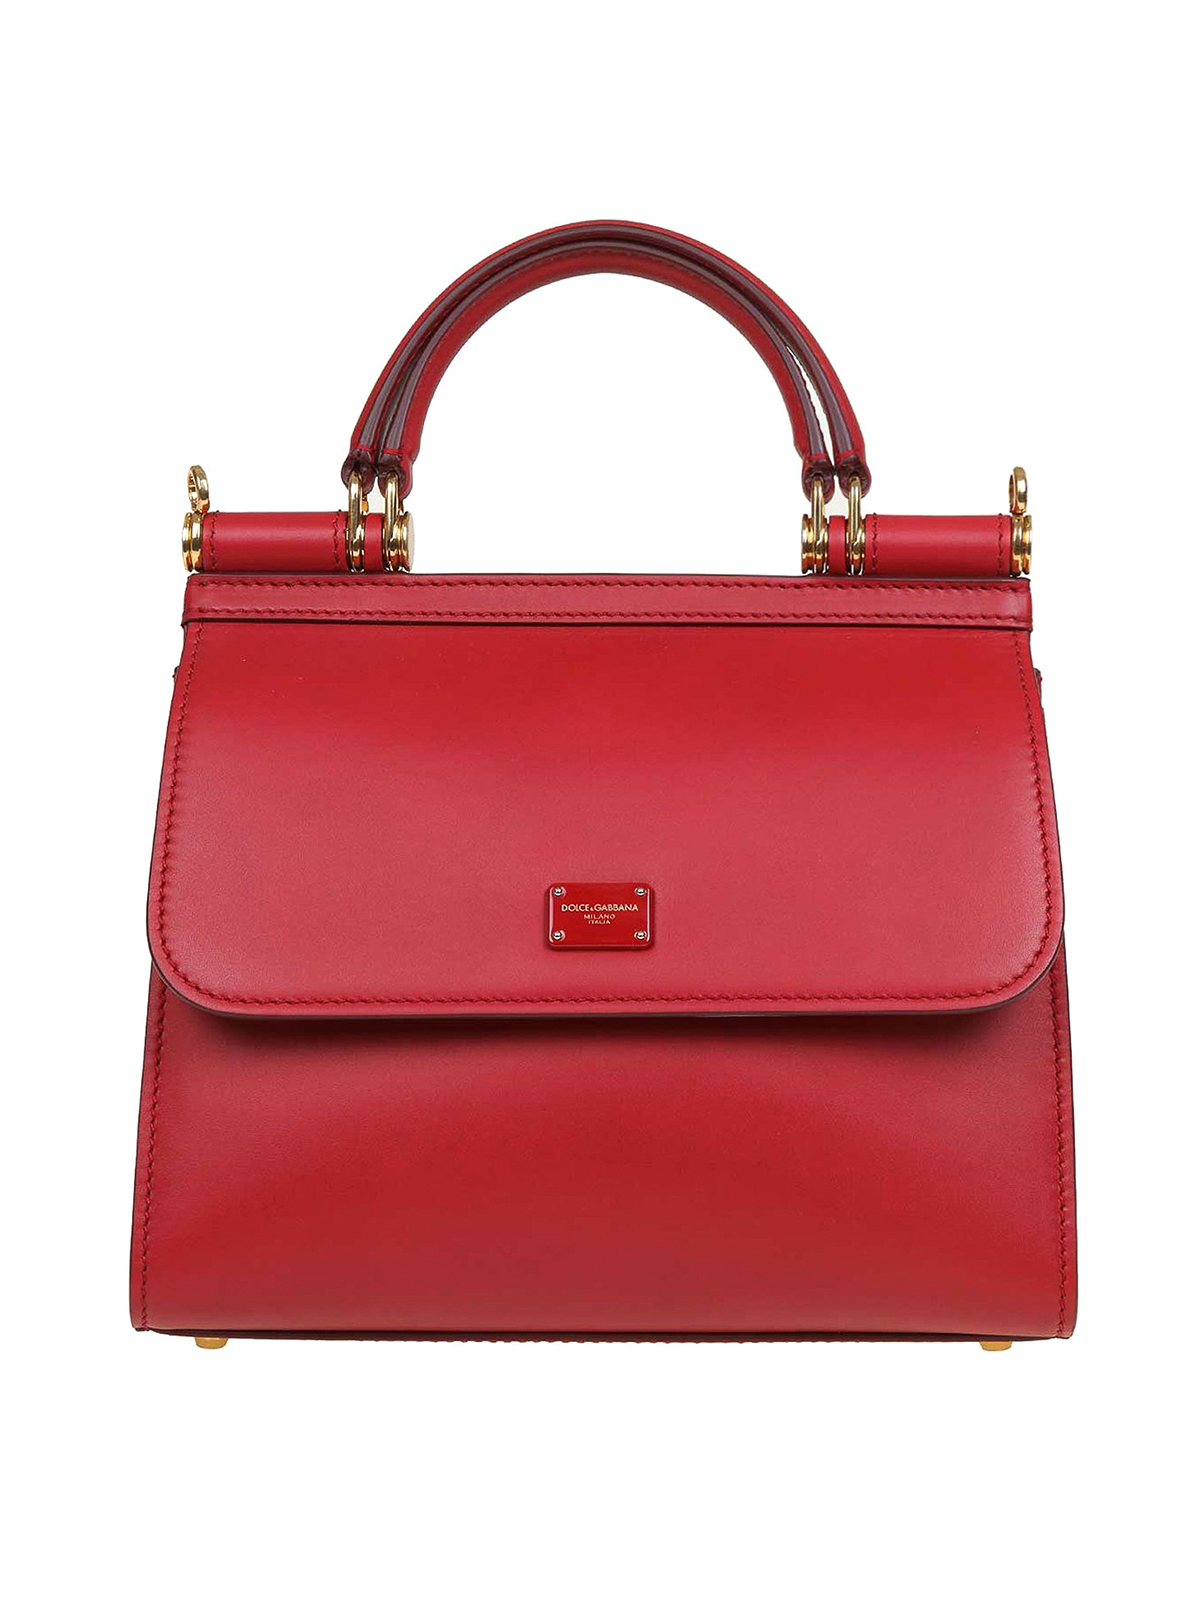 Dolce & Gabbana Miss Sicily Mini Shoulder Bag in Red